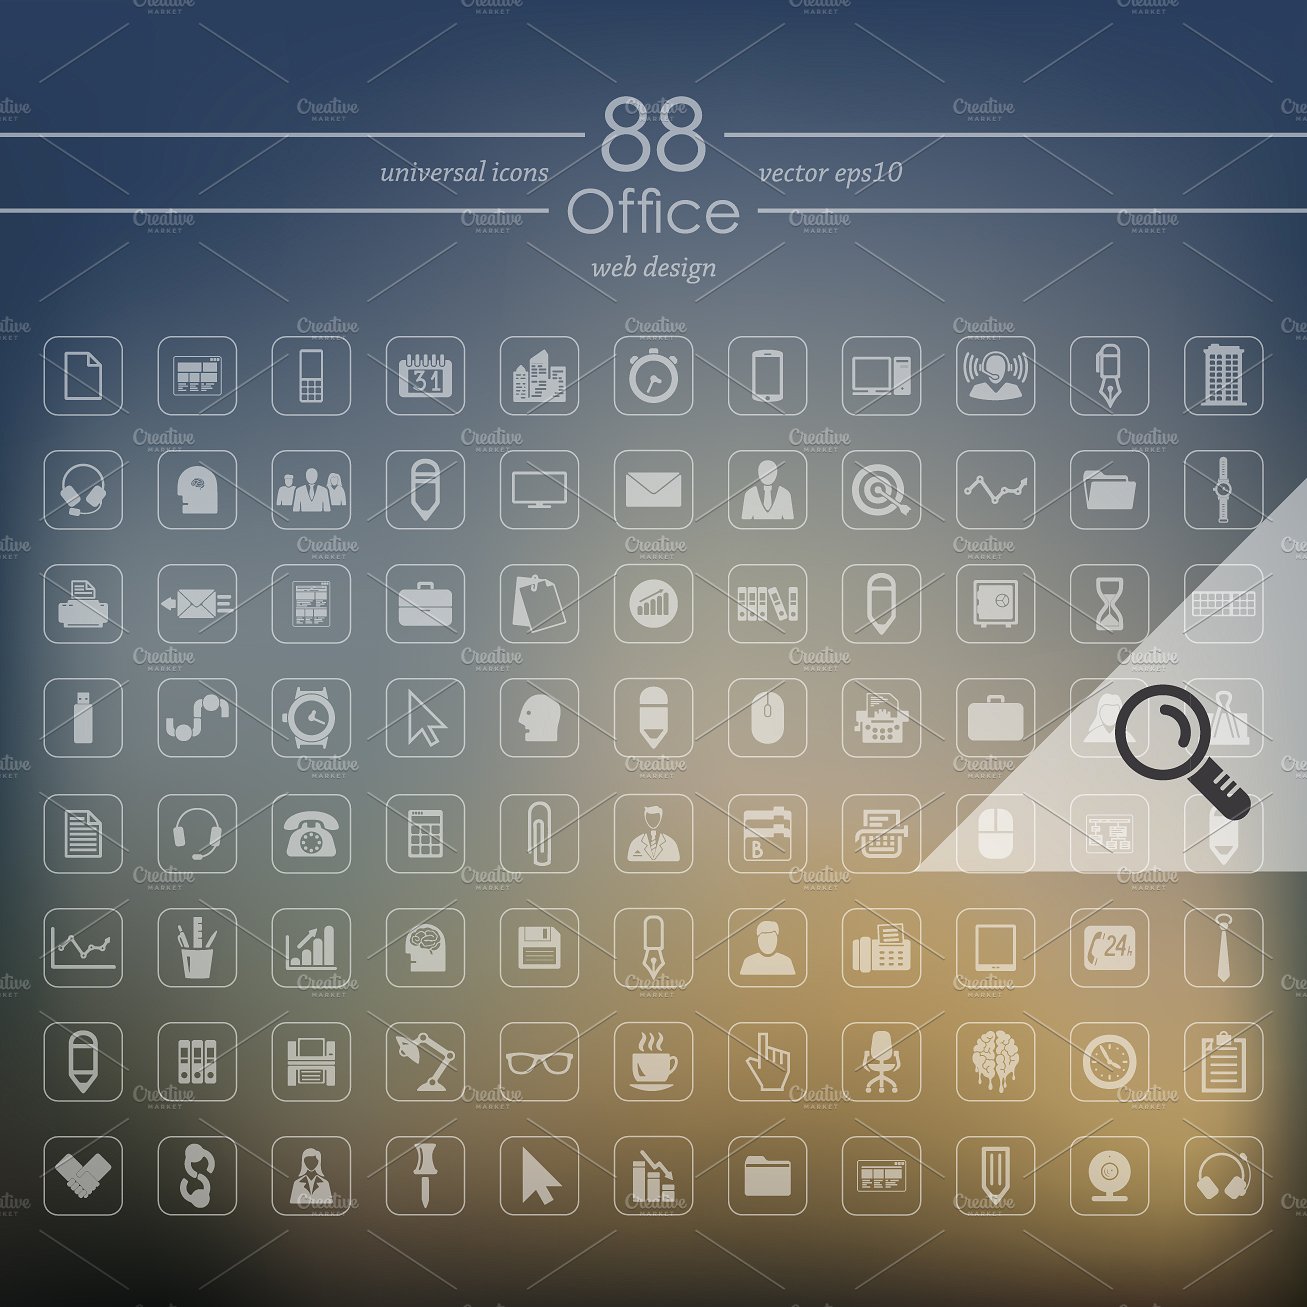 商务上班图标矢量素材88 OFFICE icons #200